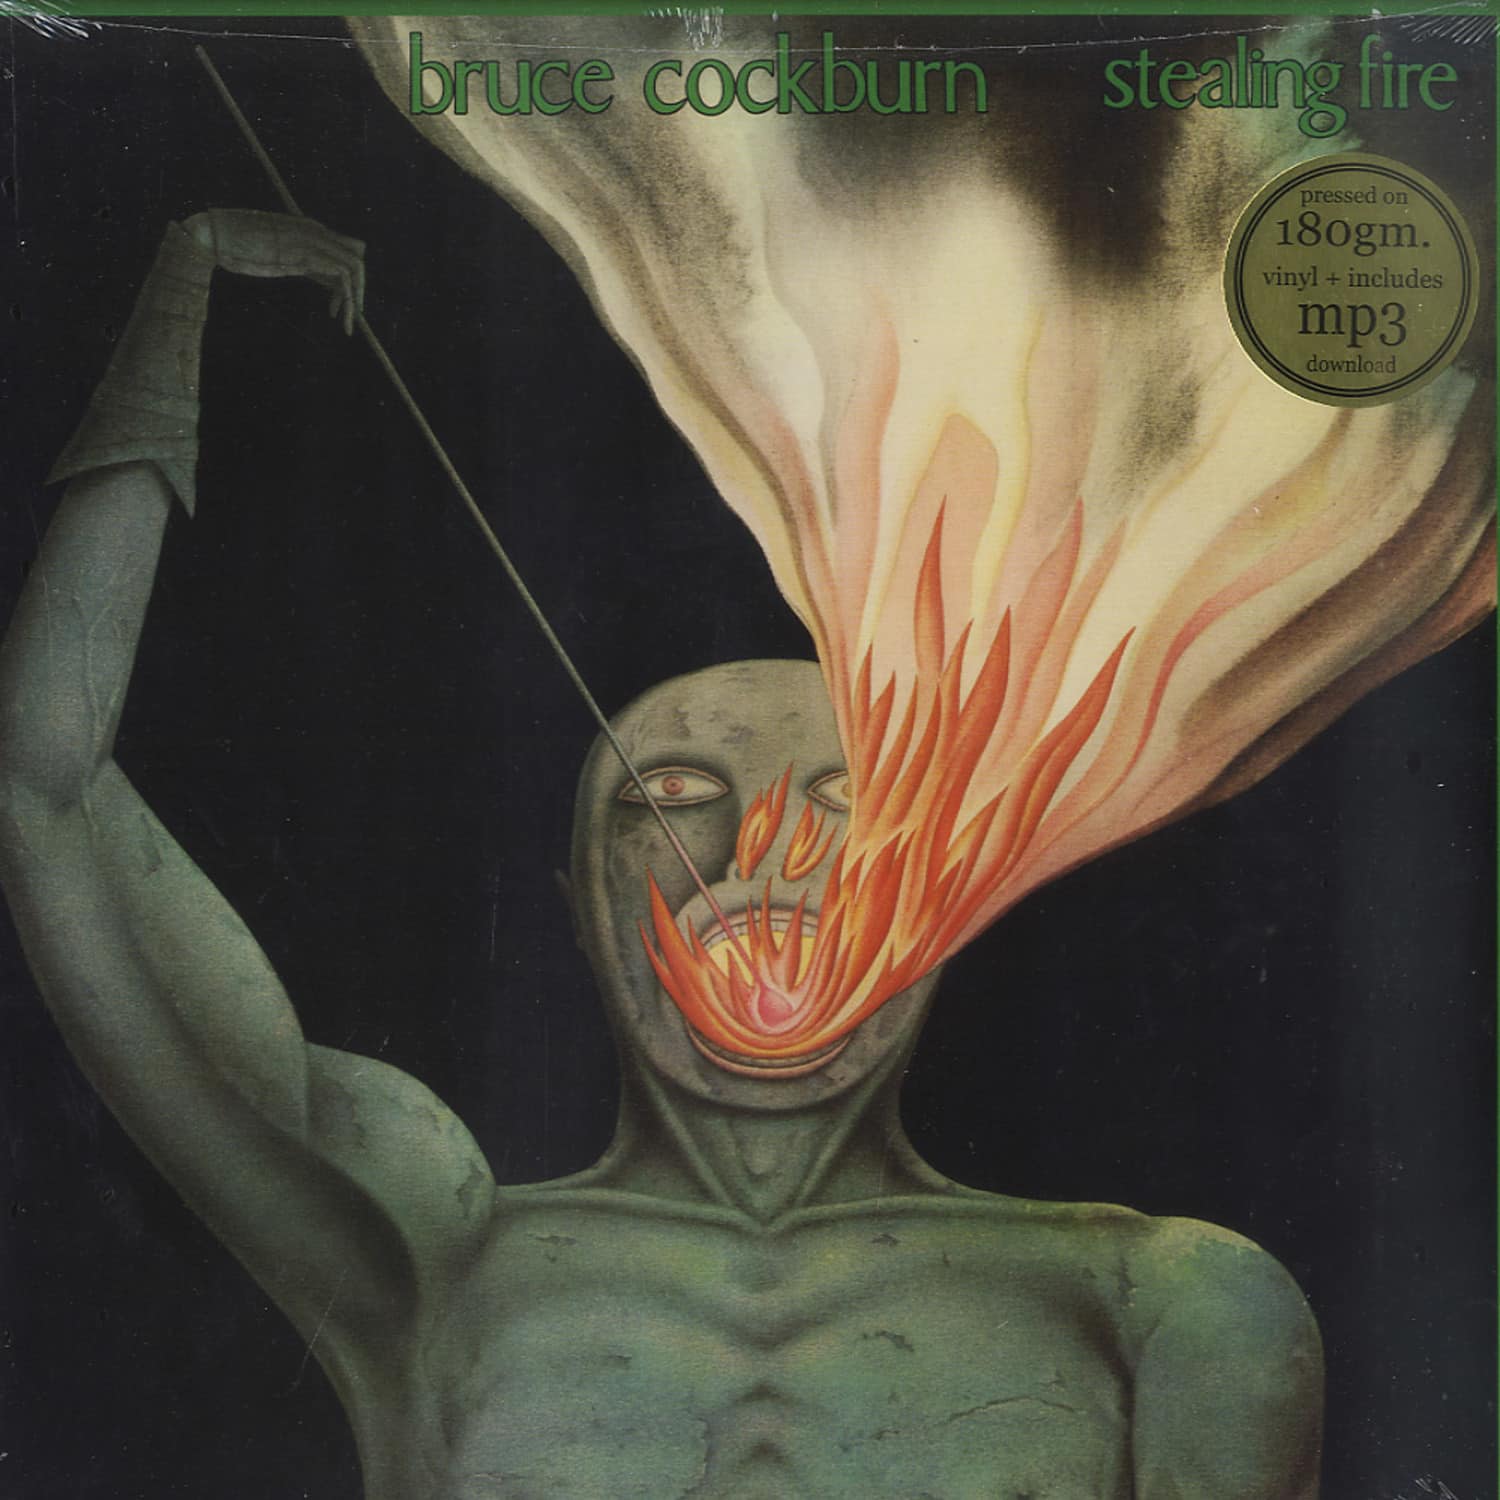 Bruce Cockburn - Stealing fire 